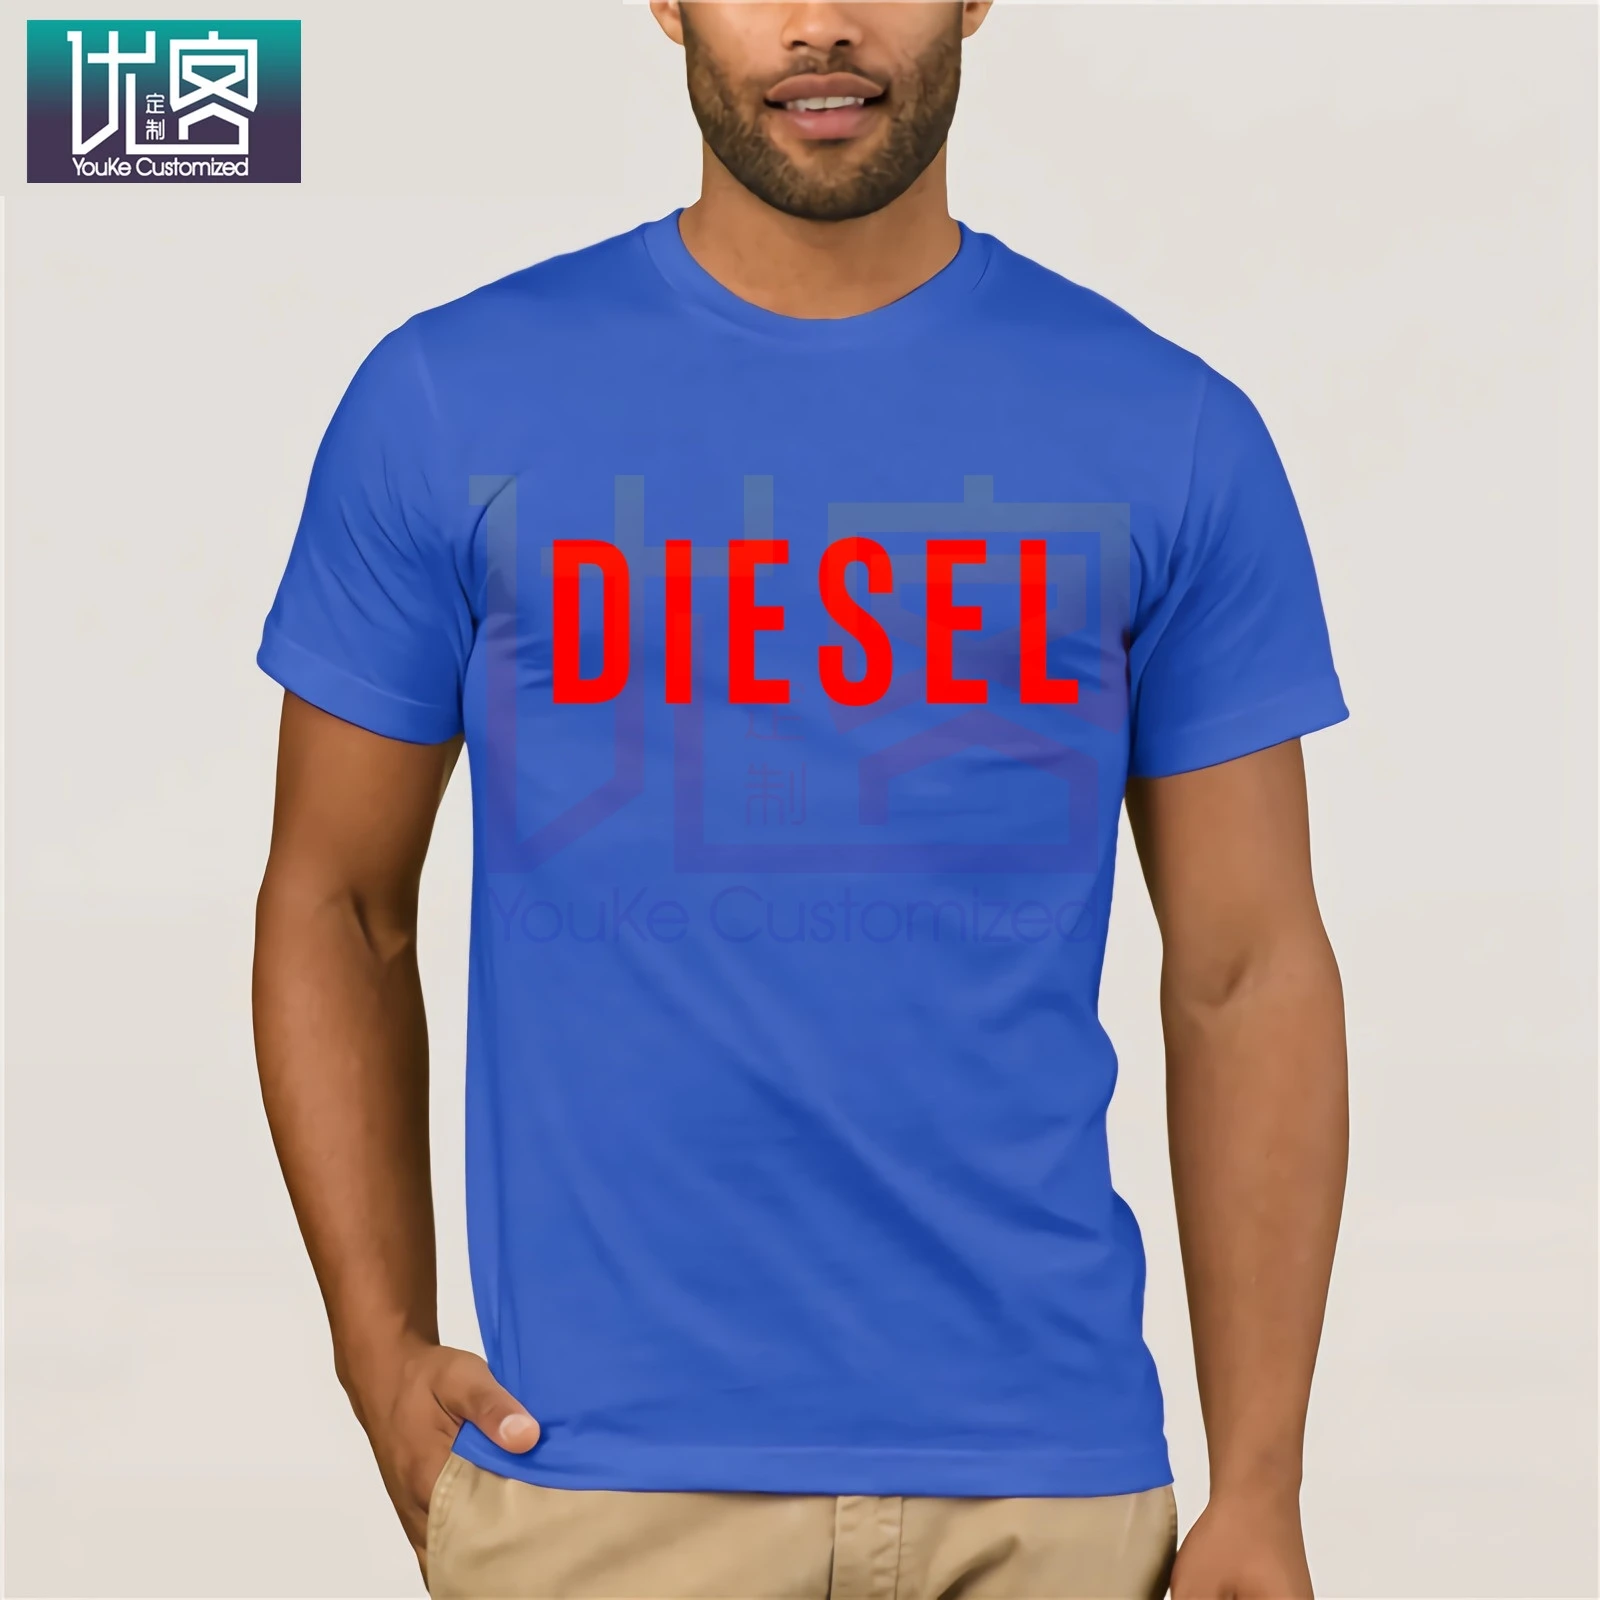 Diesel Putere Tricouri Haine Populare tricou Crewneck din Bumbac Tricouri Topuri de Vara Tricouri Bumbac Gât O Herre T-Shirt pentru Barbati Topuri